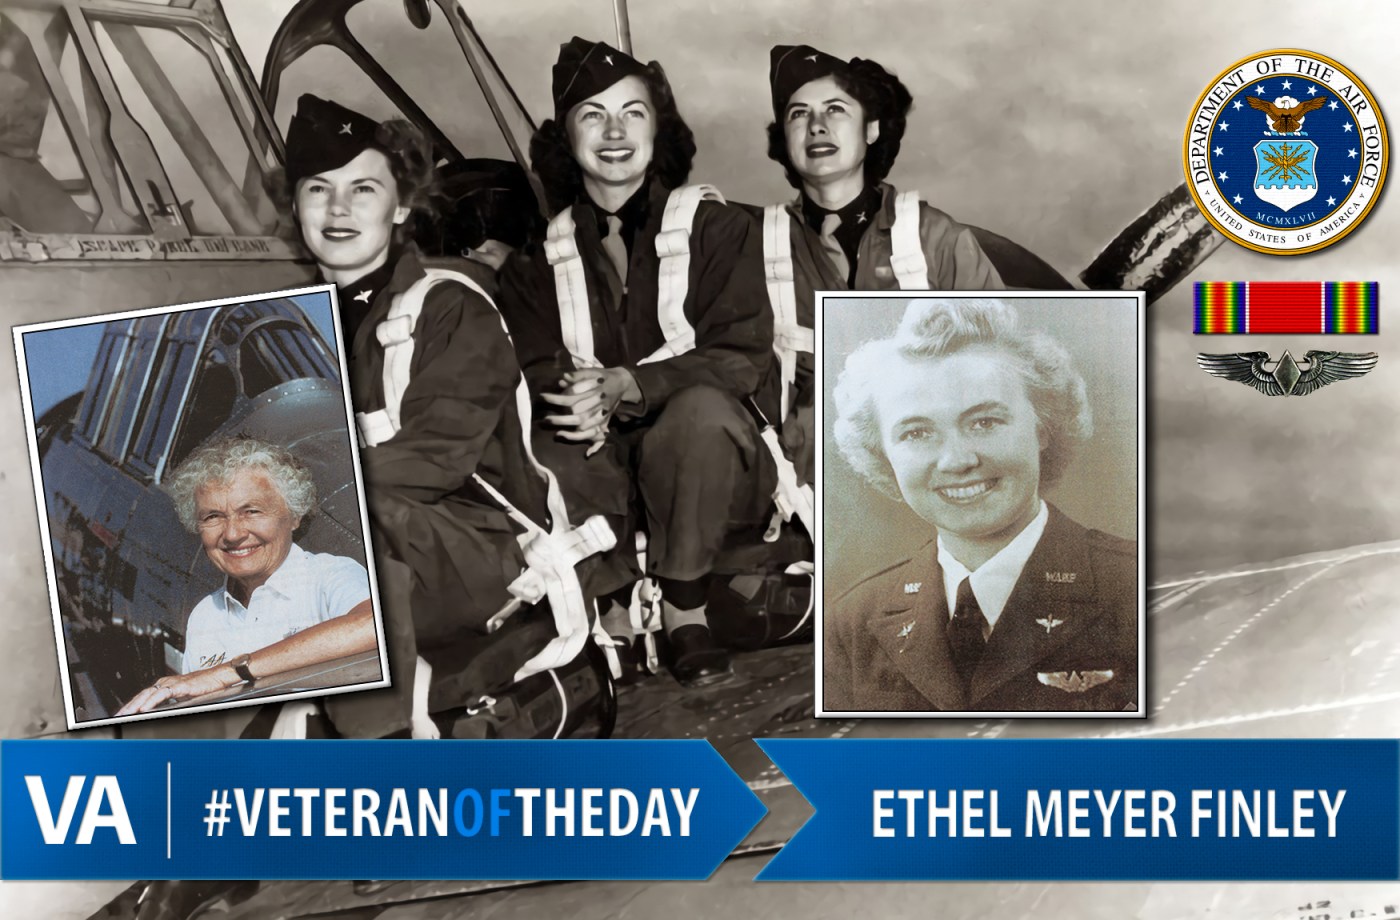 Veteran of the Day Ethel Meyer Finley